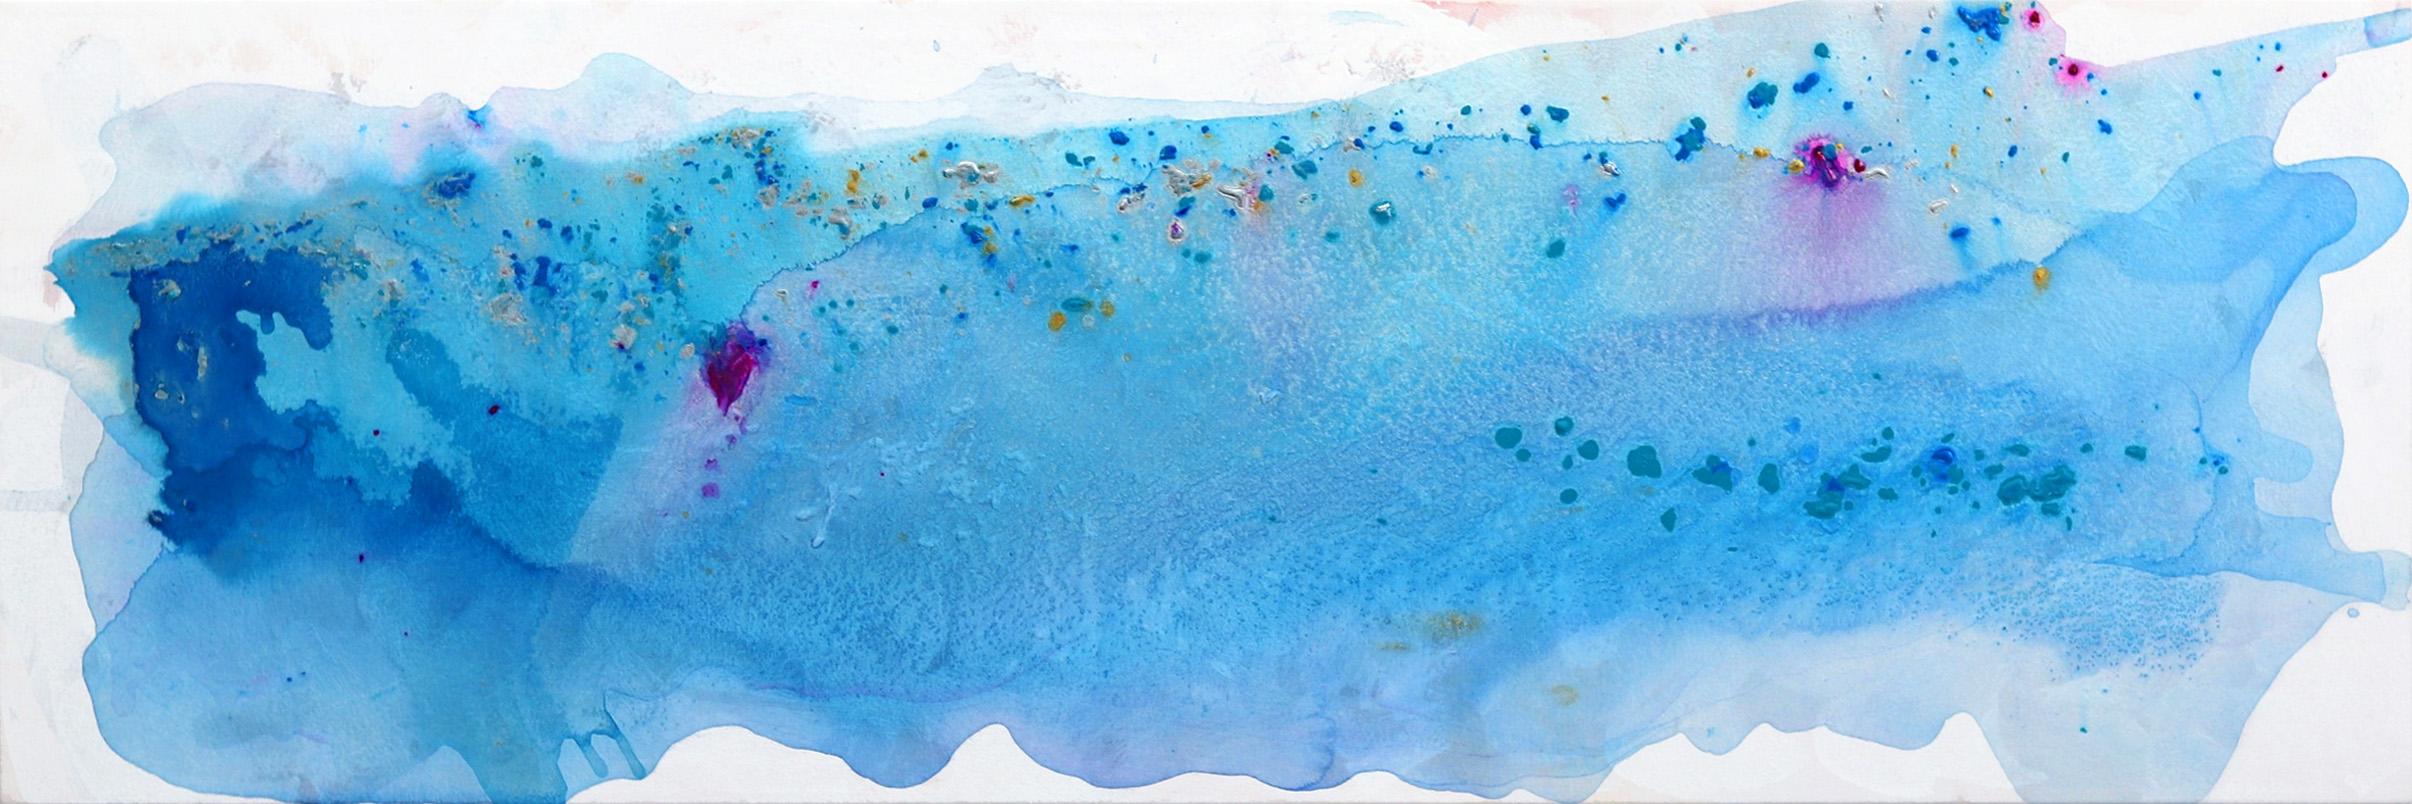 Clara Berta Abstract Painting - Hermosa Way - Large Abstract Blue Original Painting on Canvas